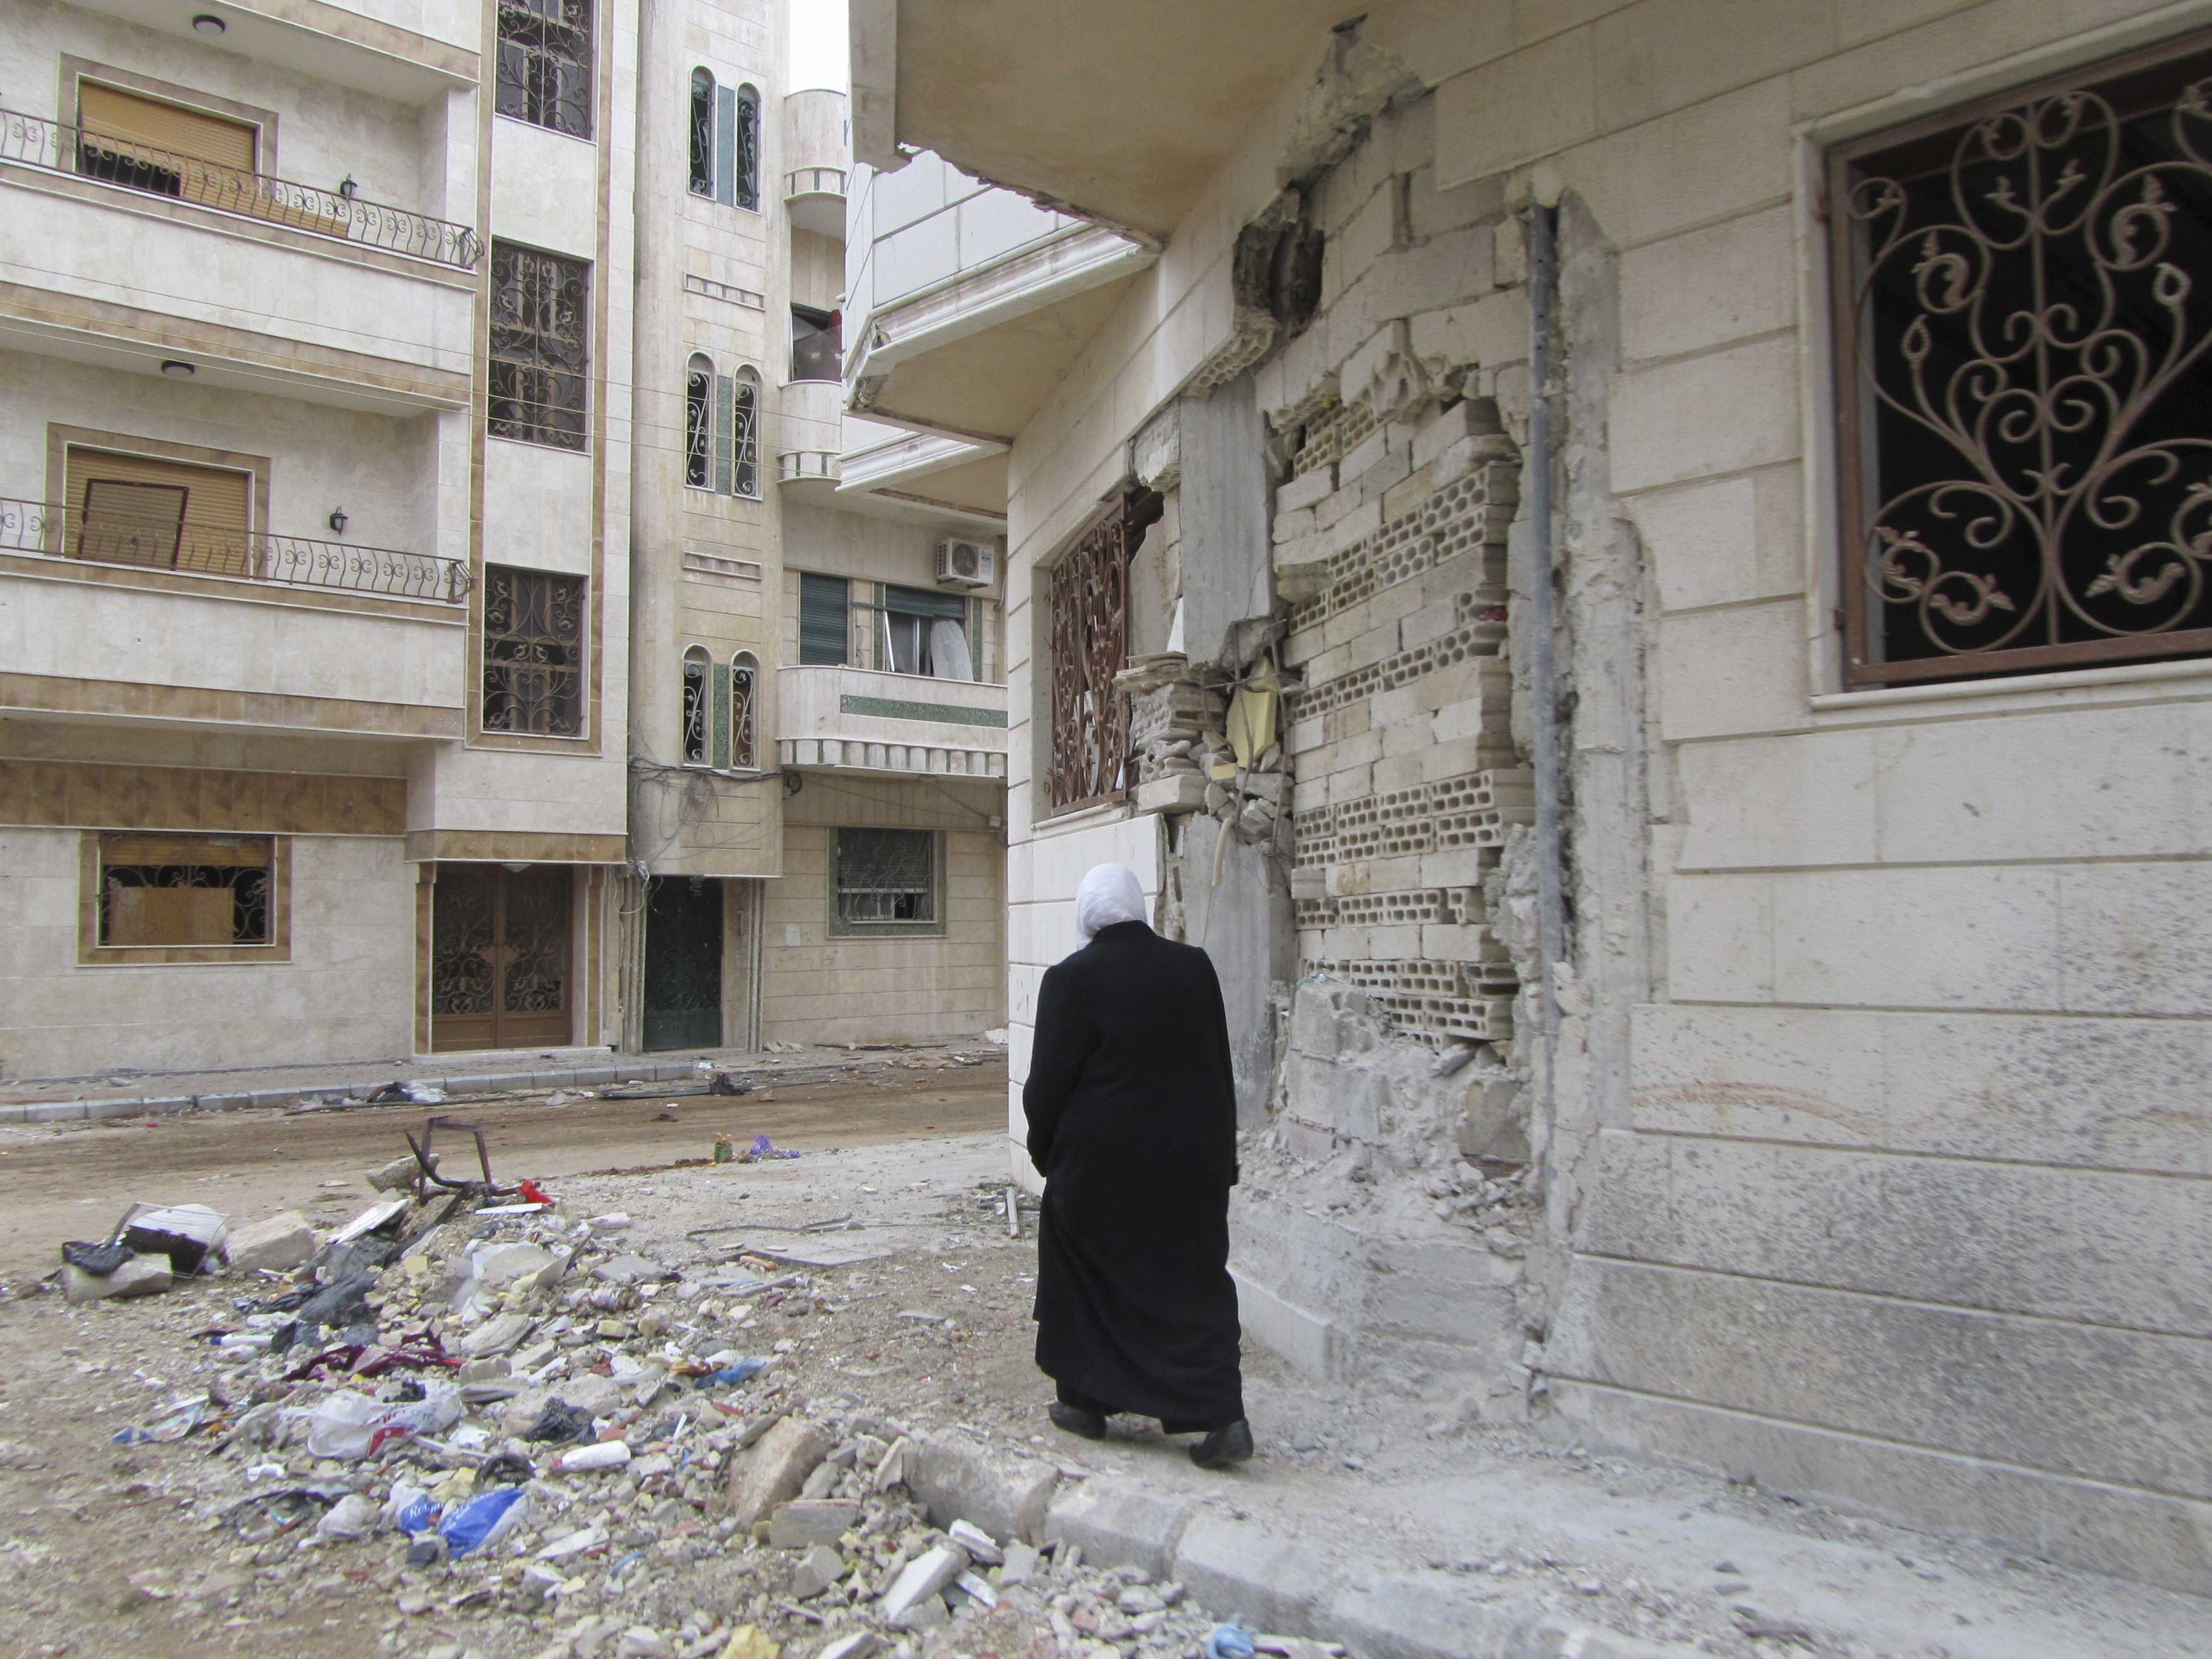 Kενό γράμμα η εκεχειρία στη Συρία, ενώ μαίνεται ο διπλωματικός πόλεμος Αγκυρας-Δαμασκού